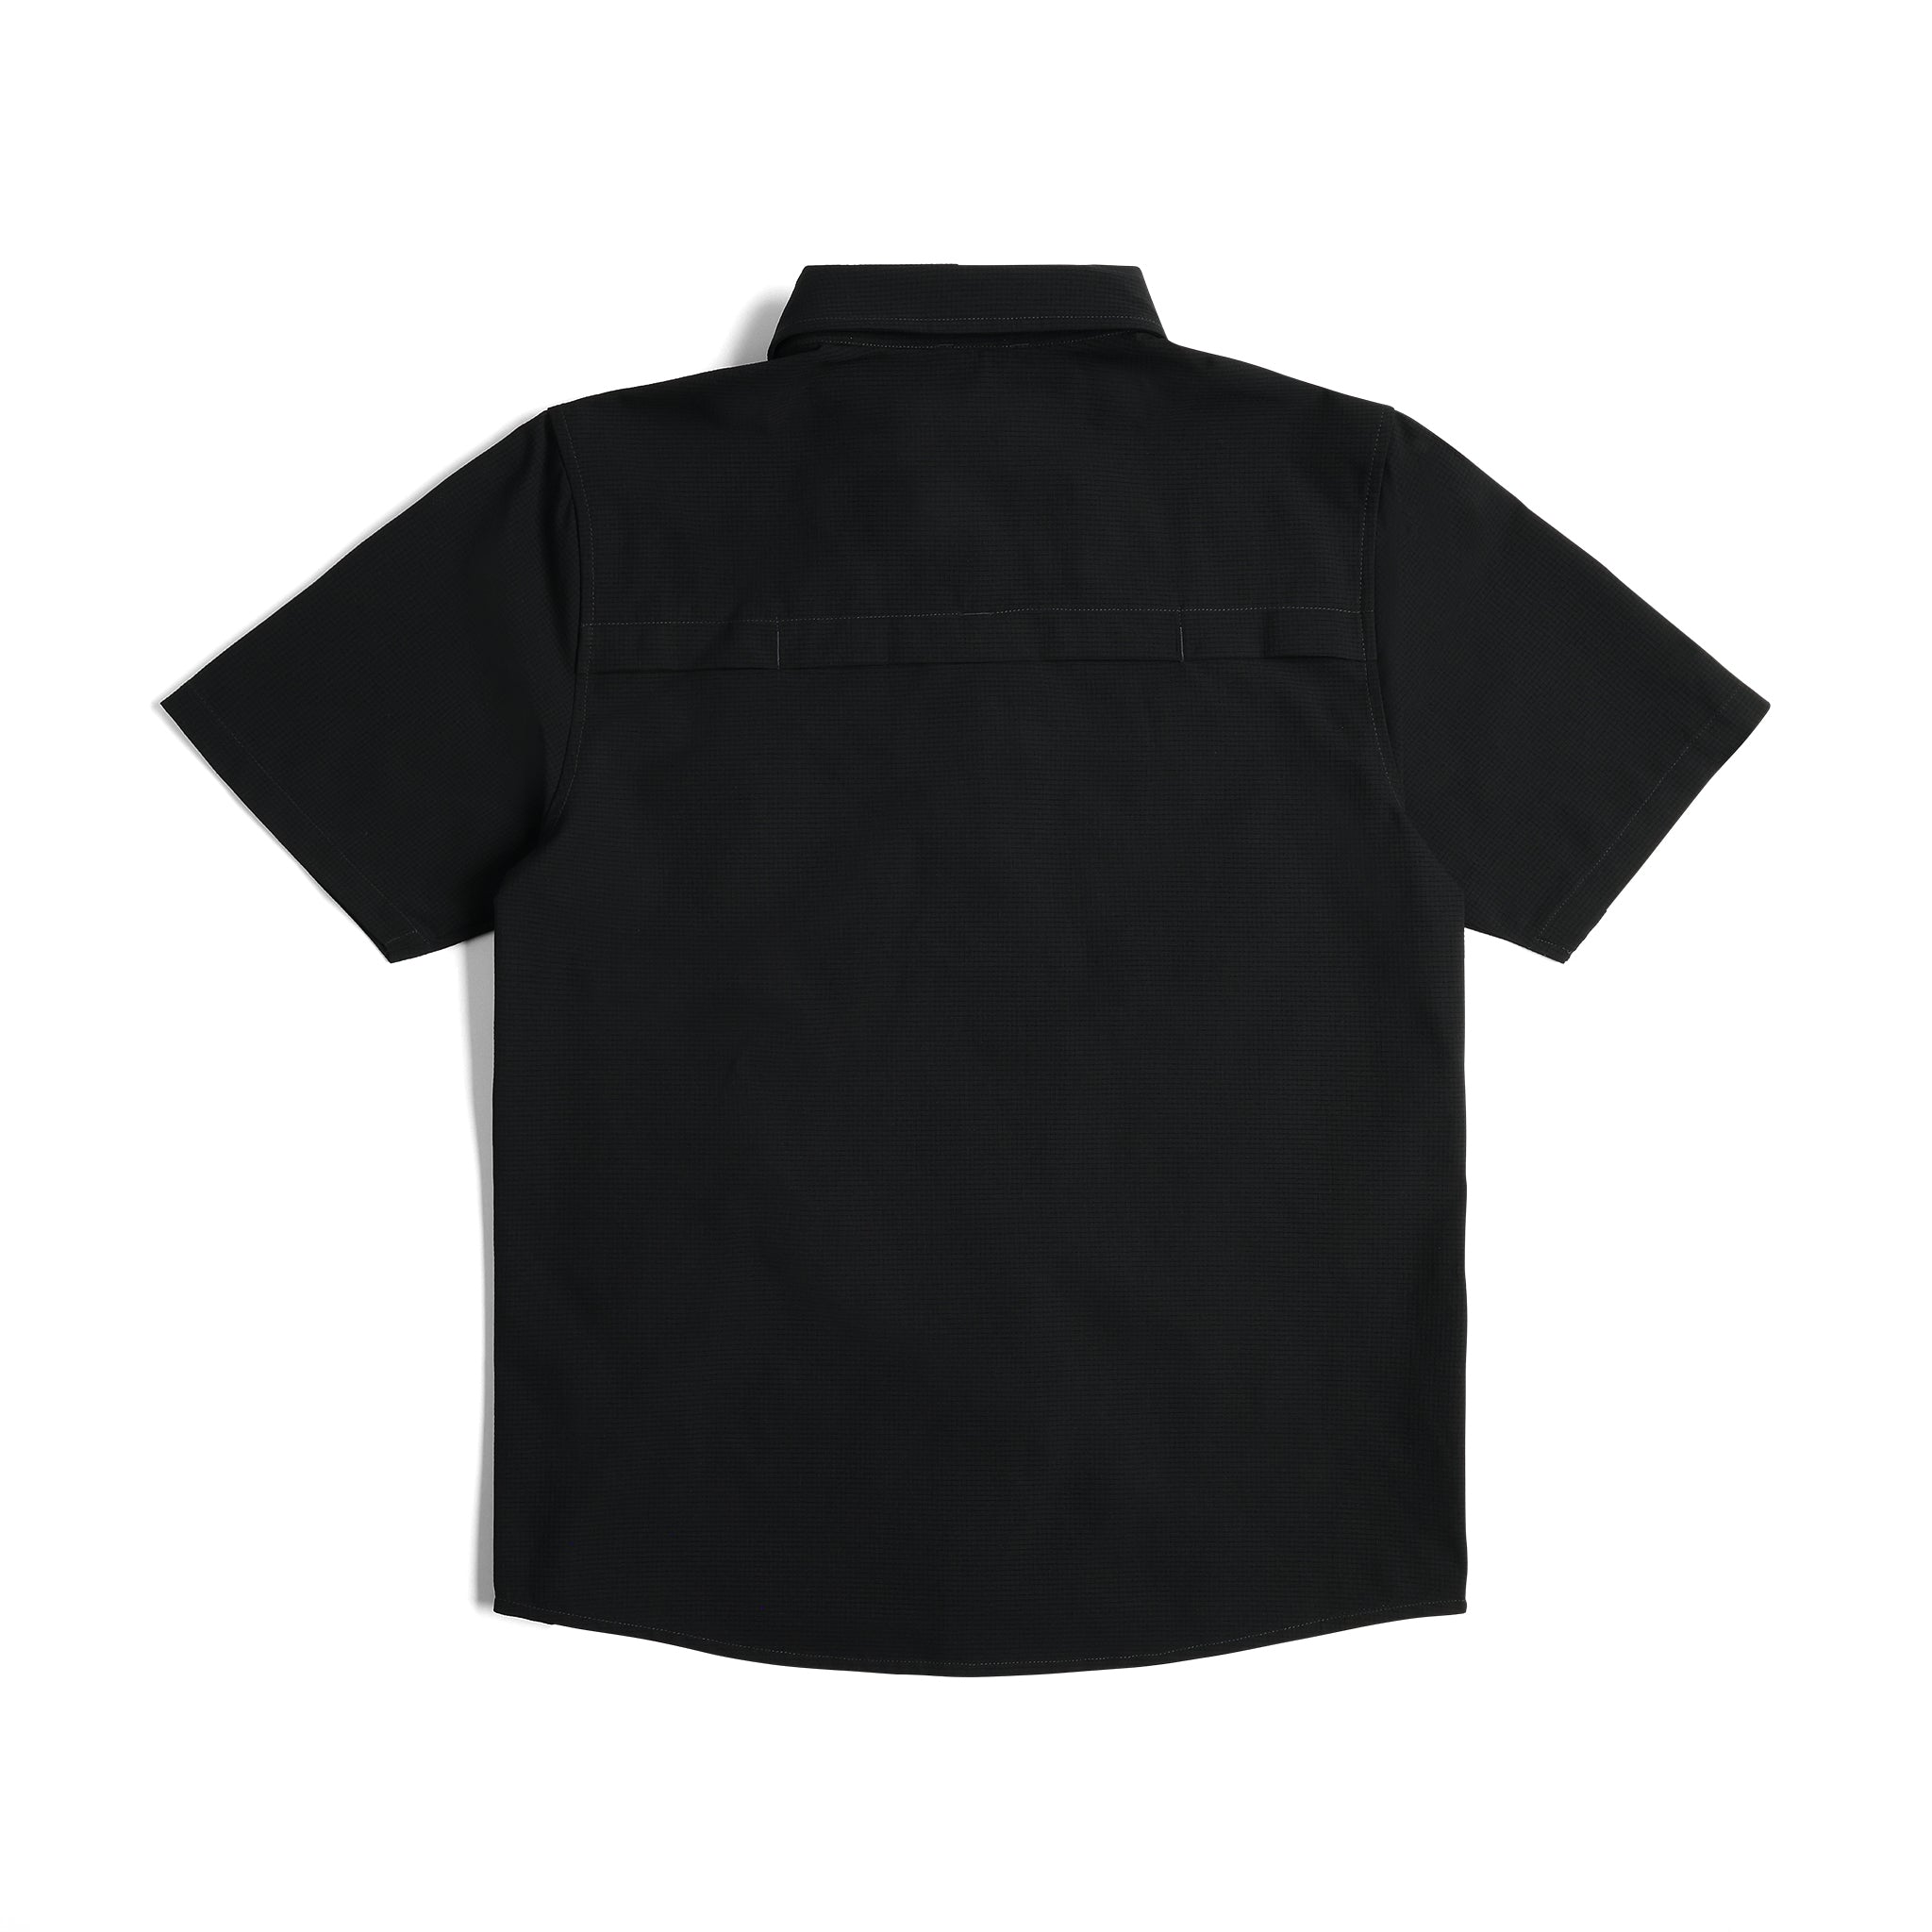 Back View of Topo Designs Retro River Shirt Ss - Men's in "Black"